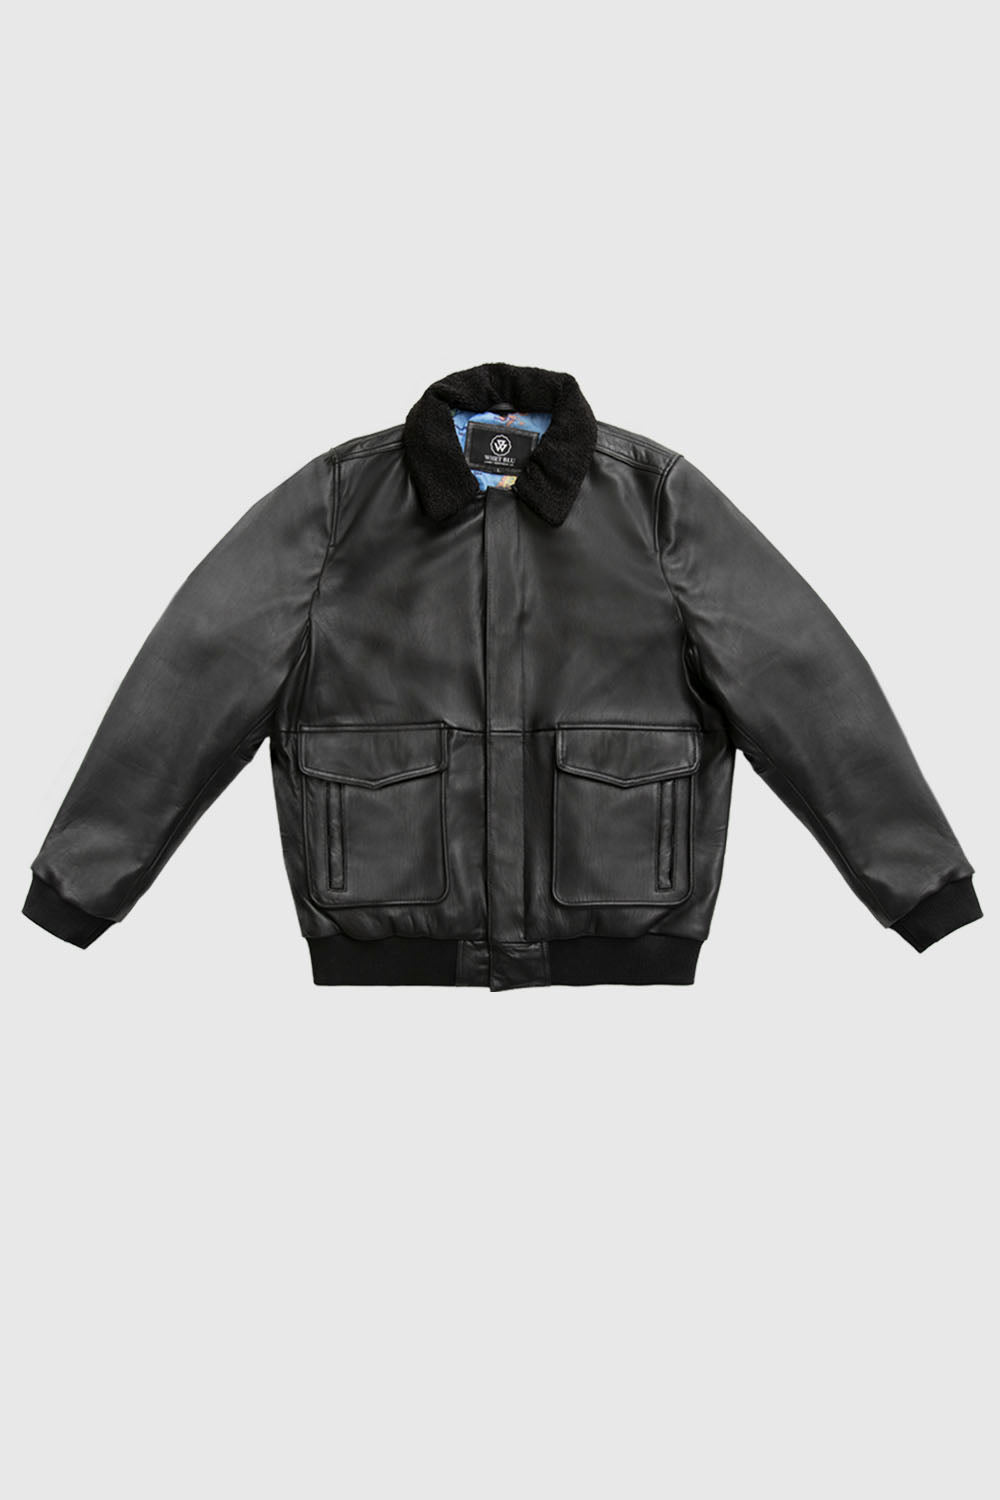 Baron - Men's Fashion Leather Jacket – Whet Blu NYC